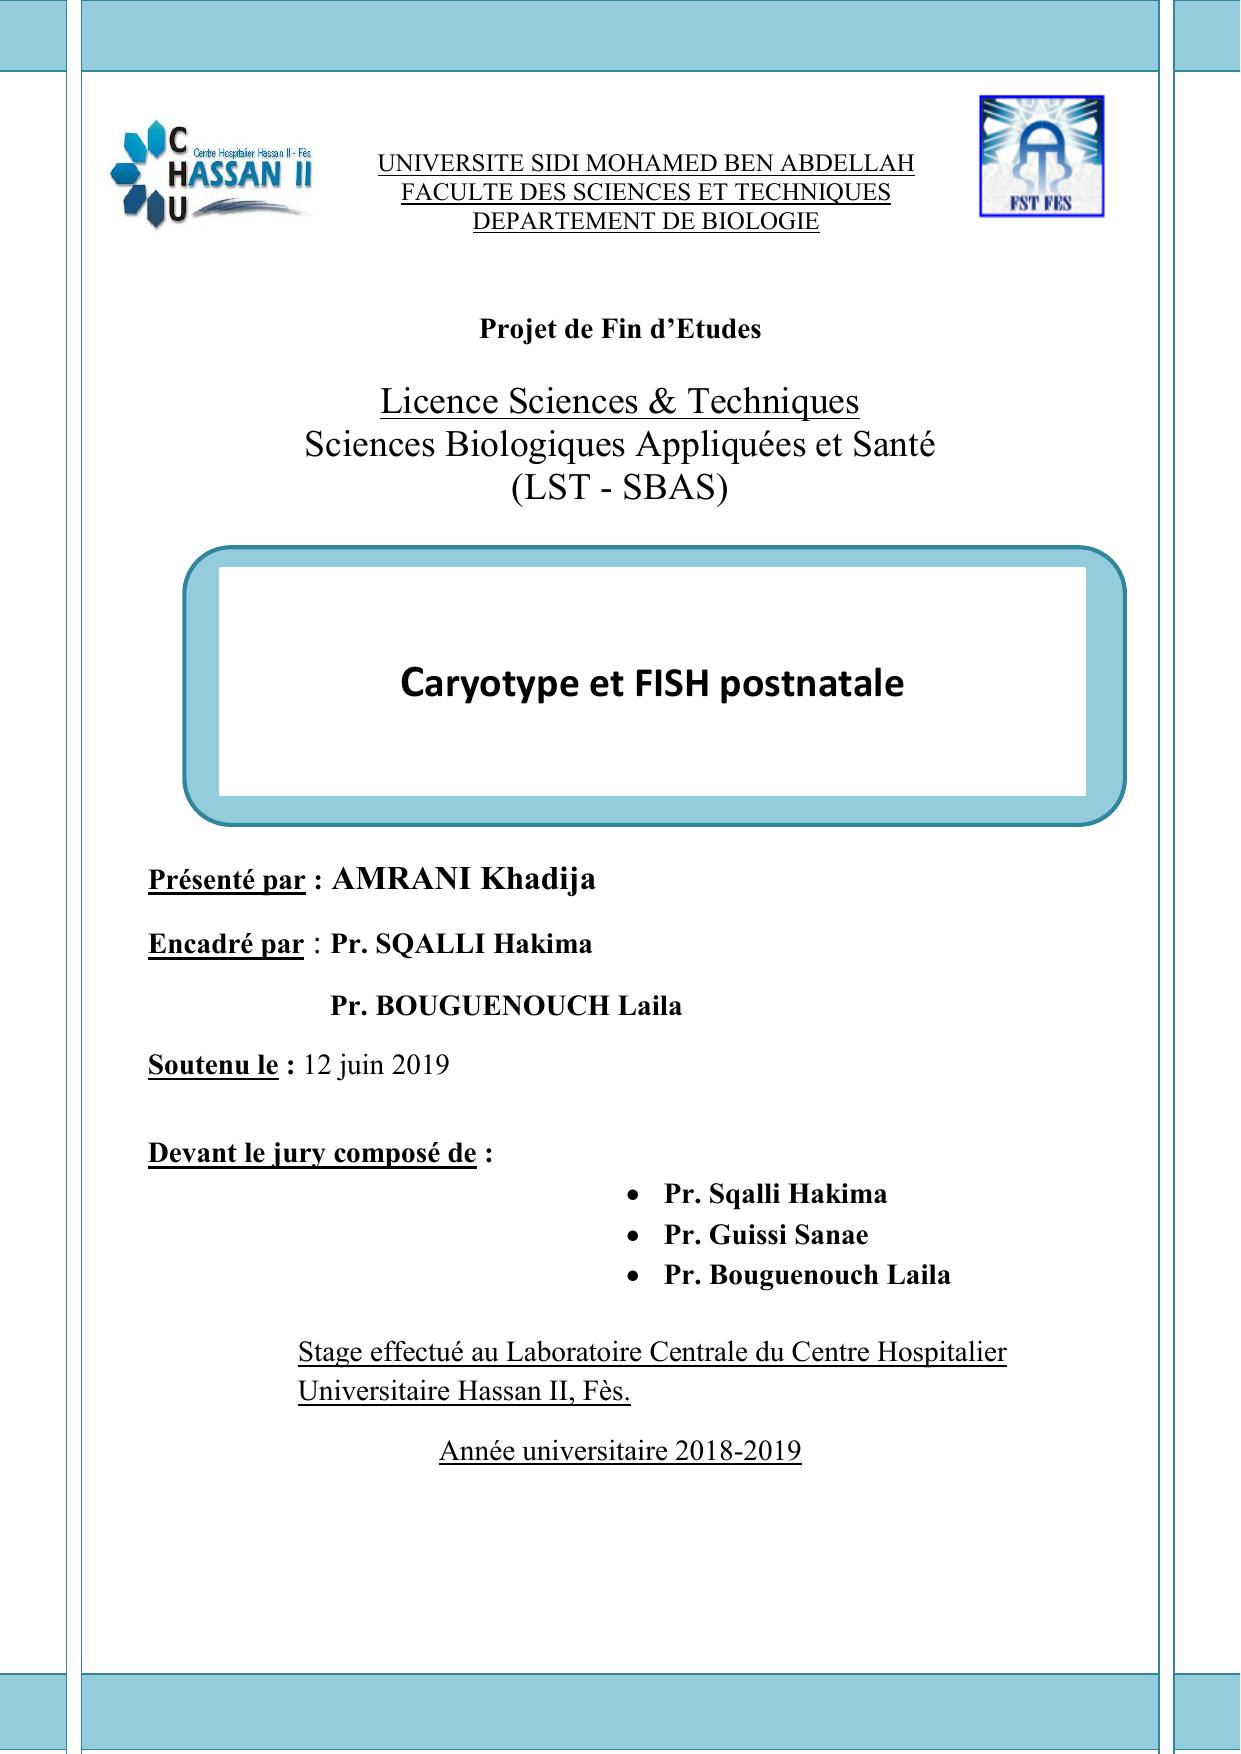 Caryotype et FISH postnatale